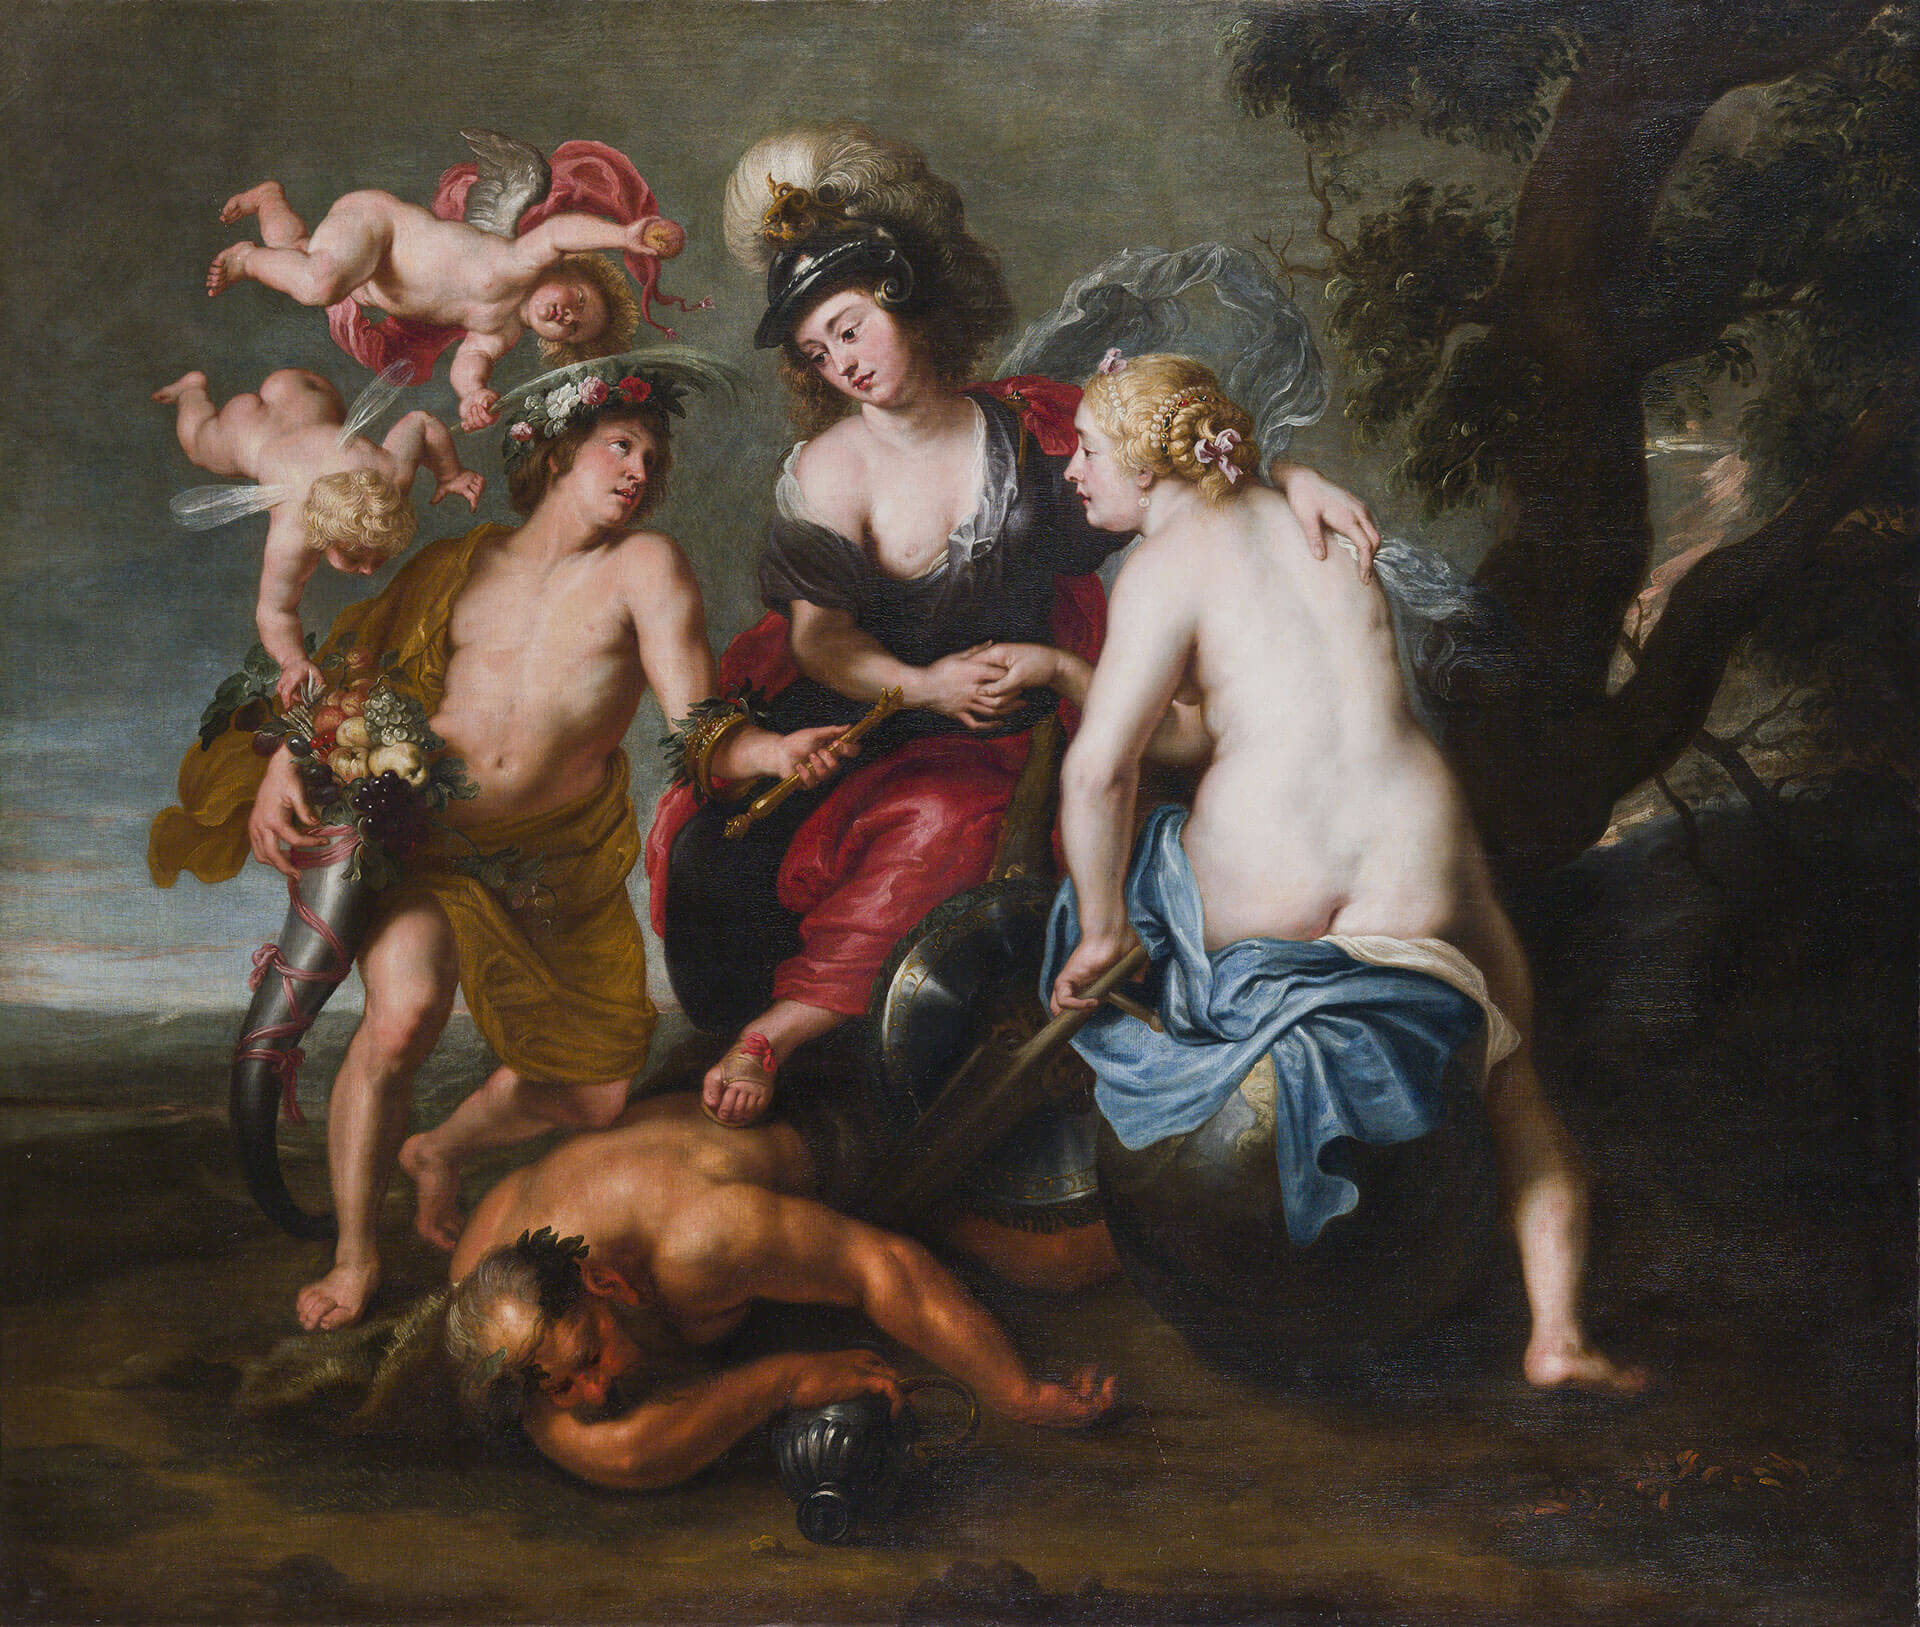 Peter Paul Rubens and Studio